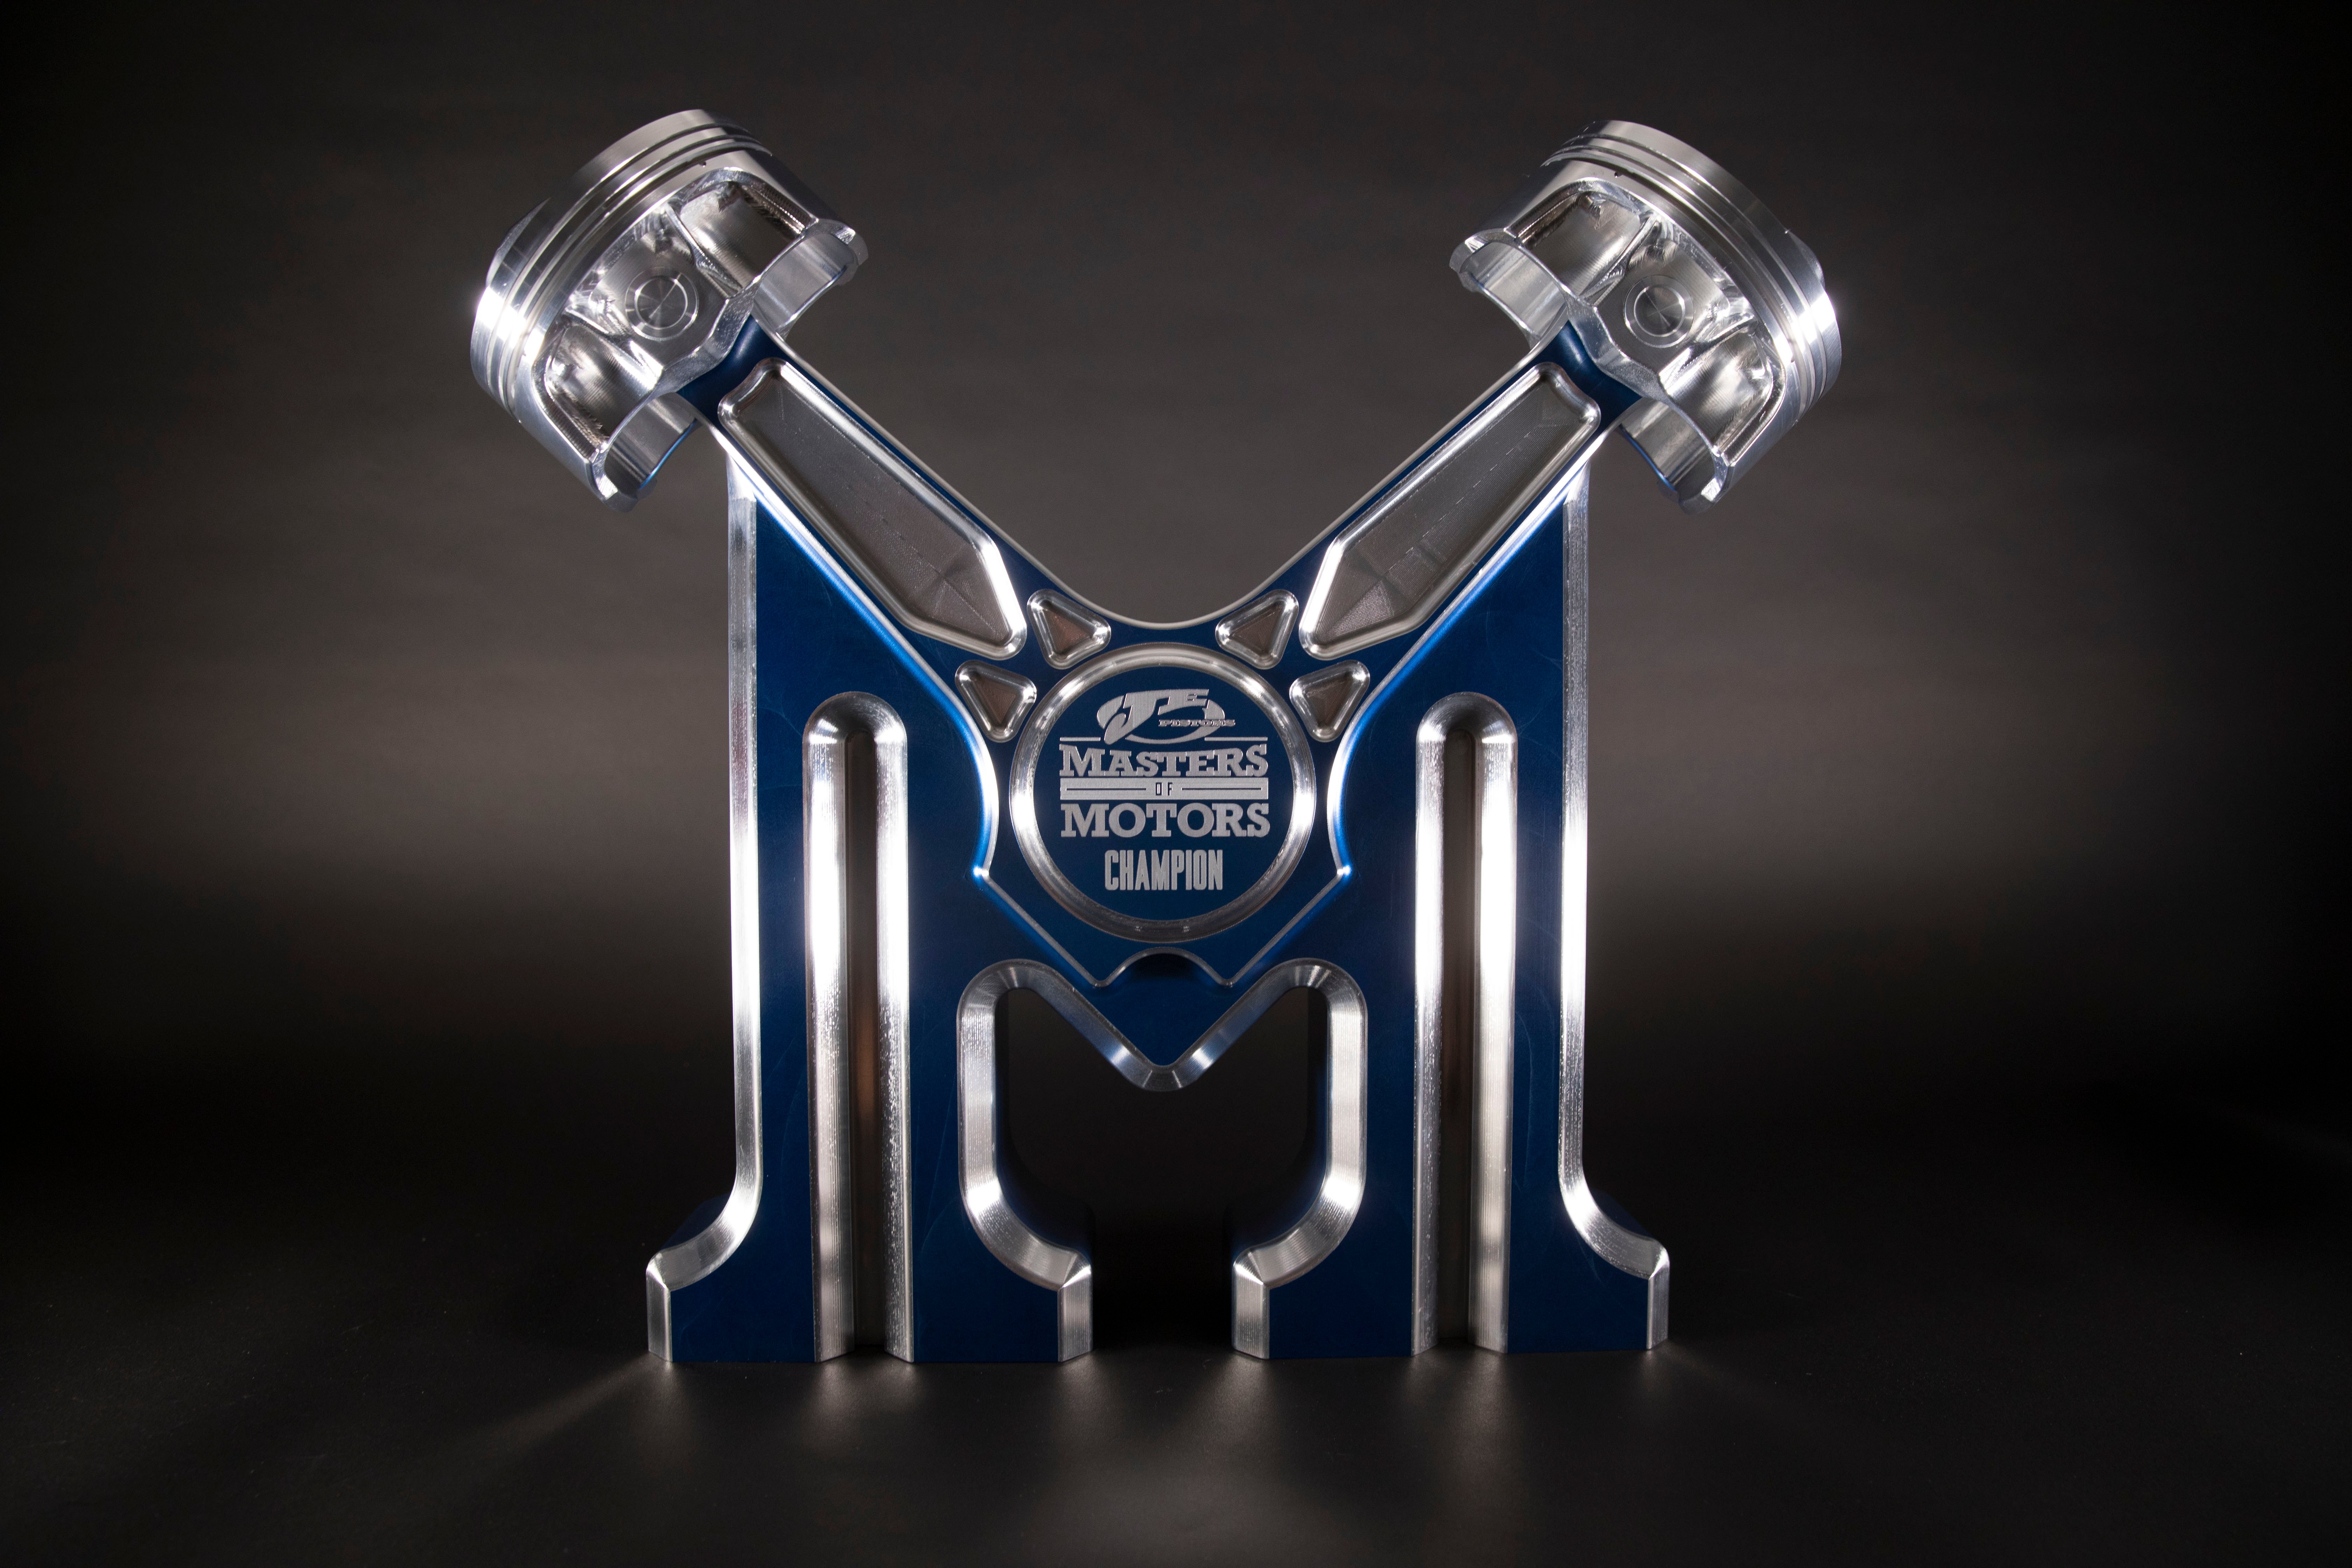 001-masters-of-motors-trophy